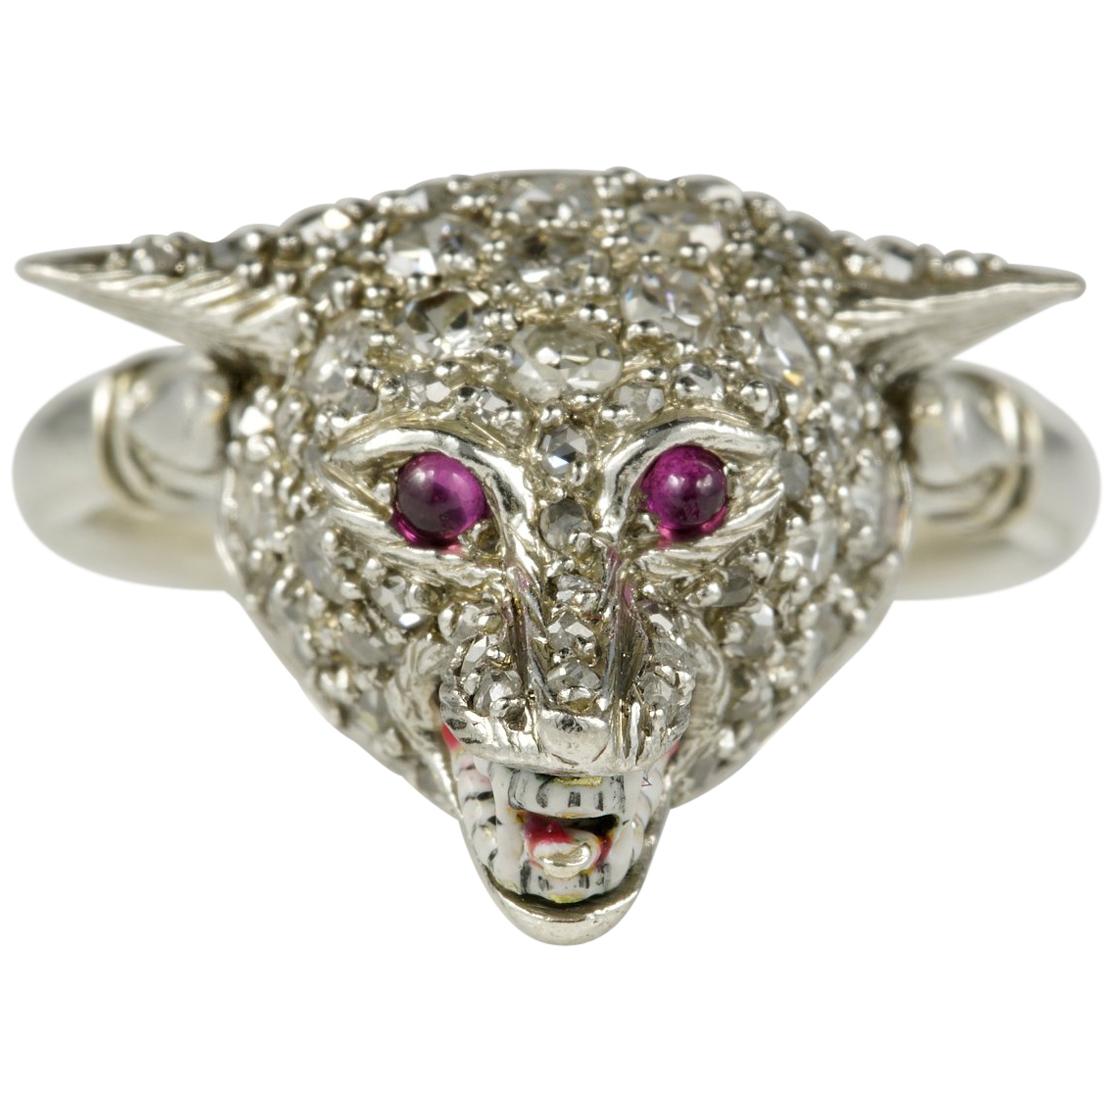 English Edwardian Diamond Ruby Wild Wolf Rare Platinum Ring